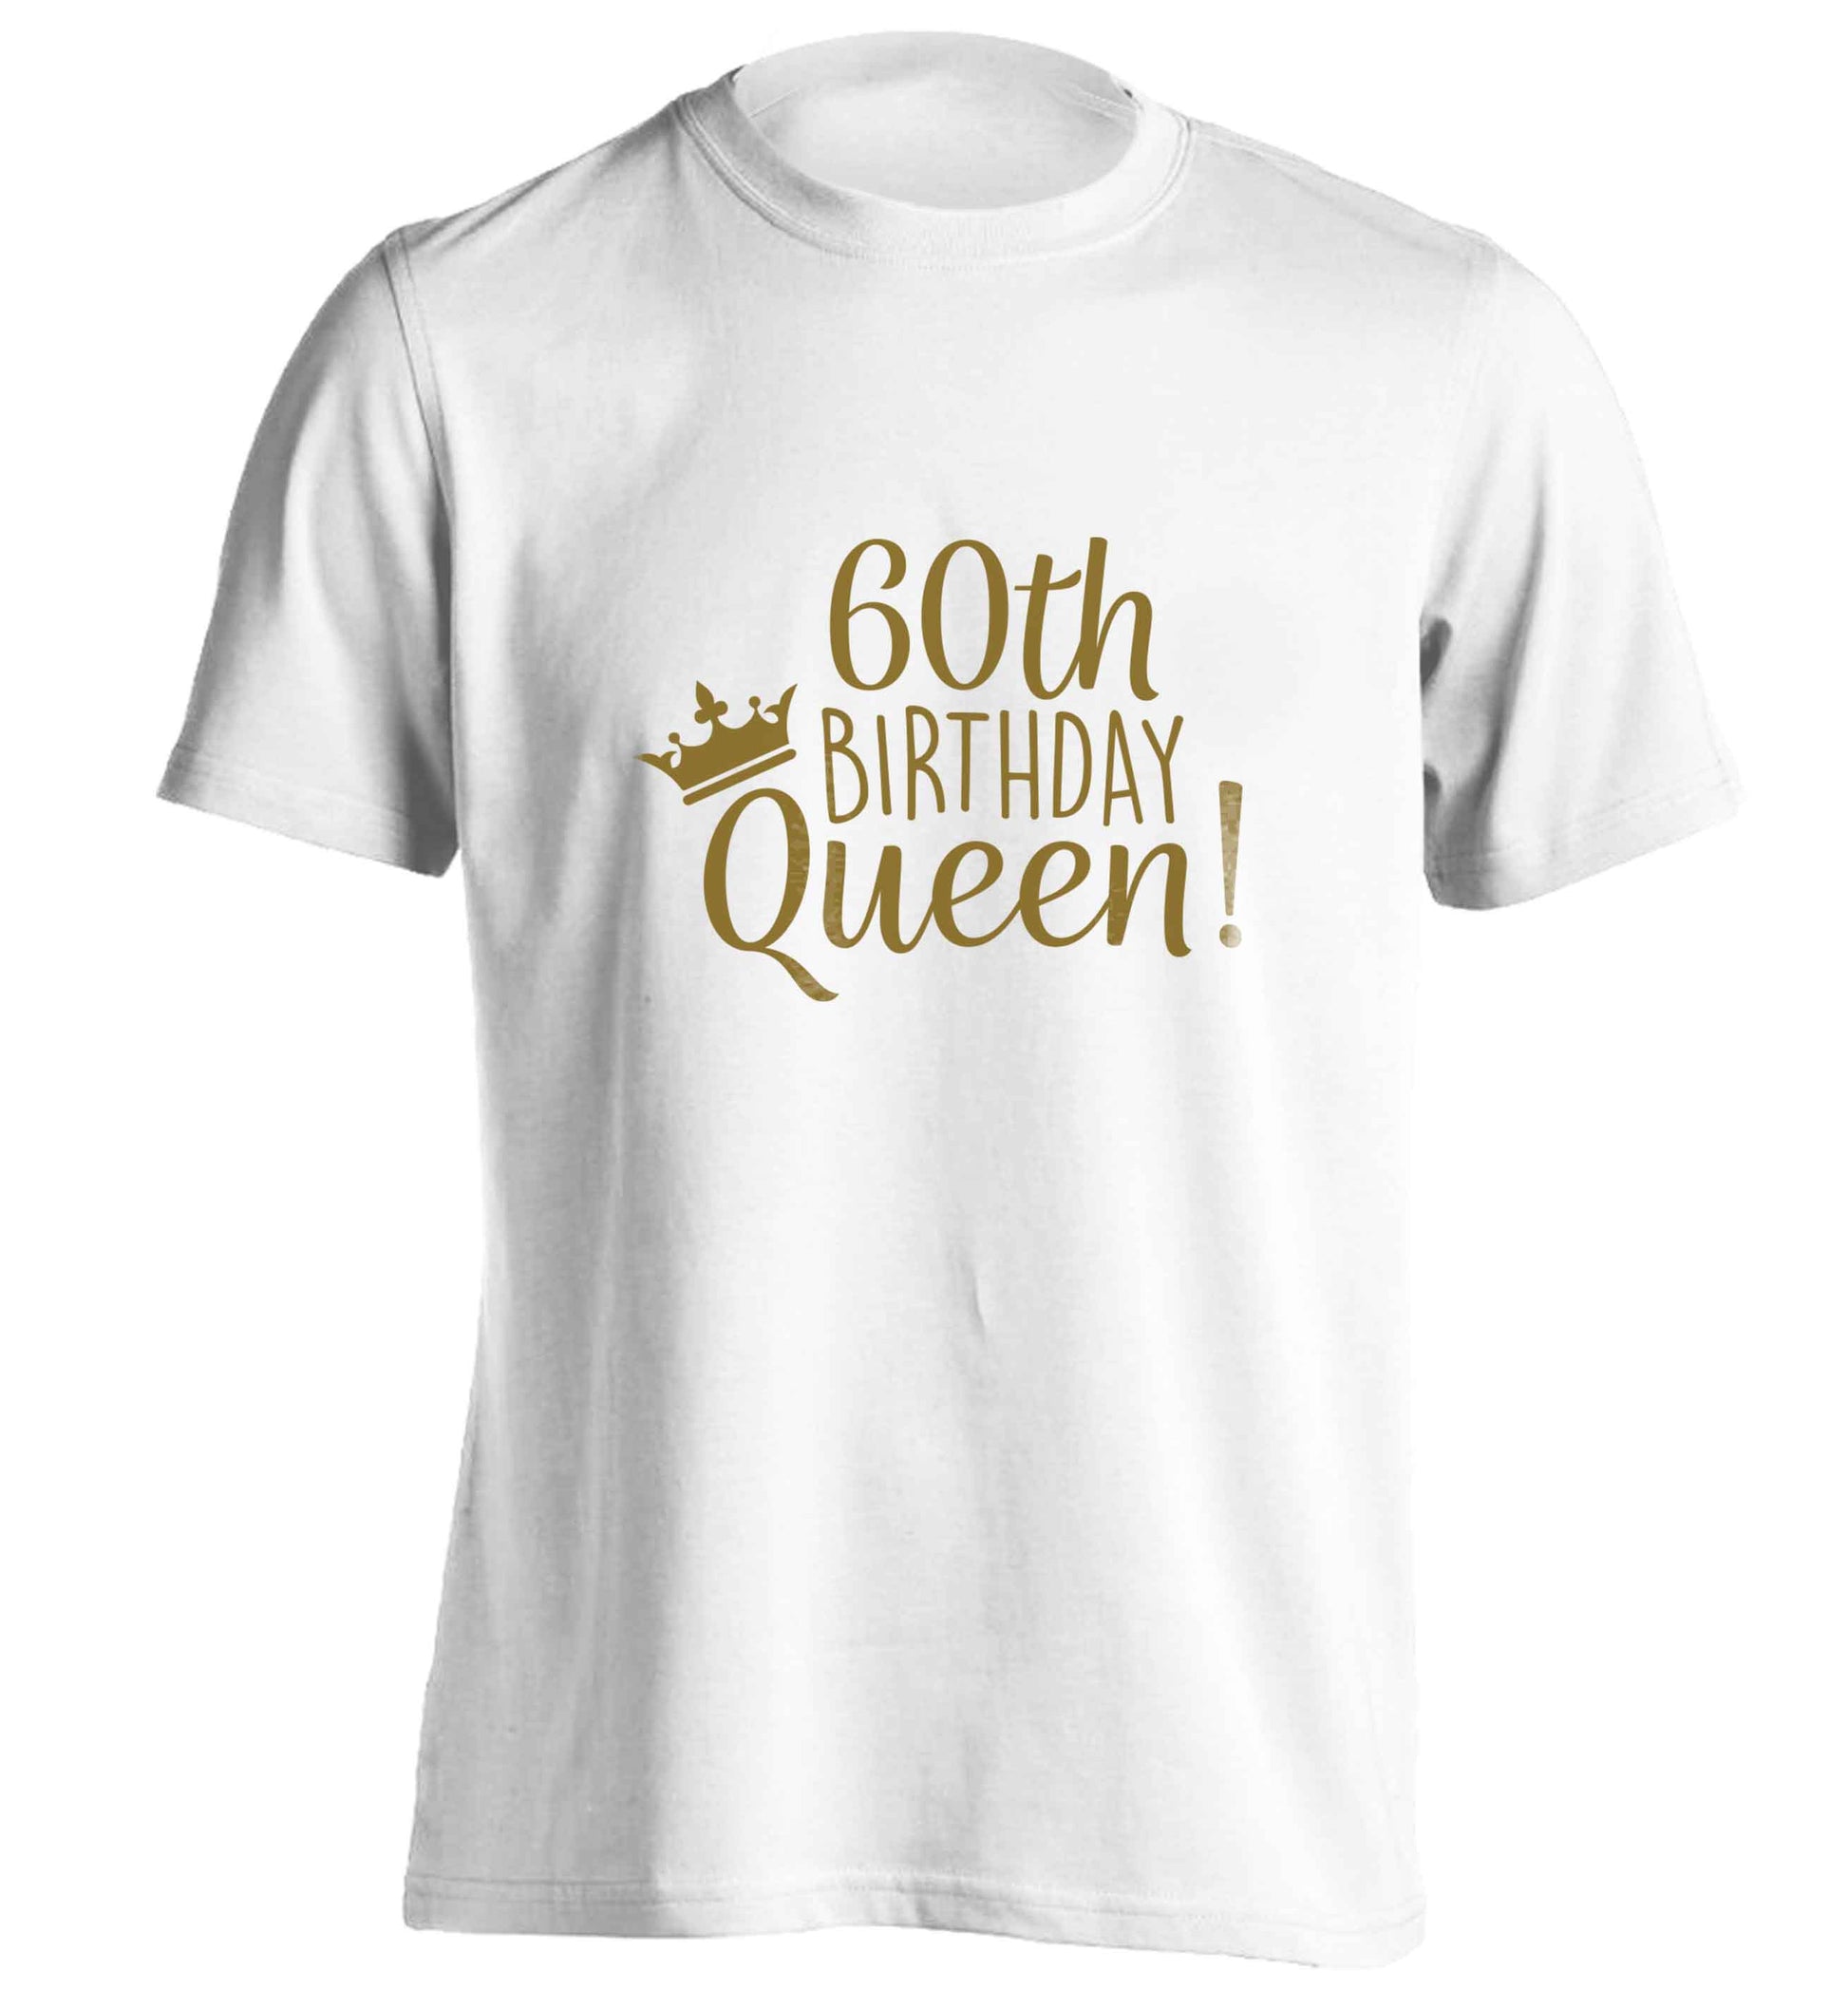 60th birthday Queen adults unisex white Tshirt 2XL